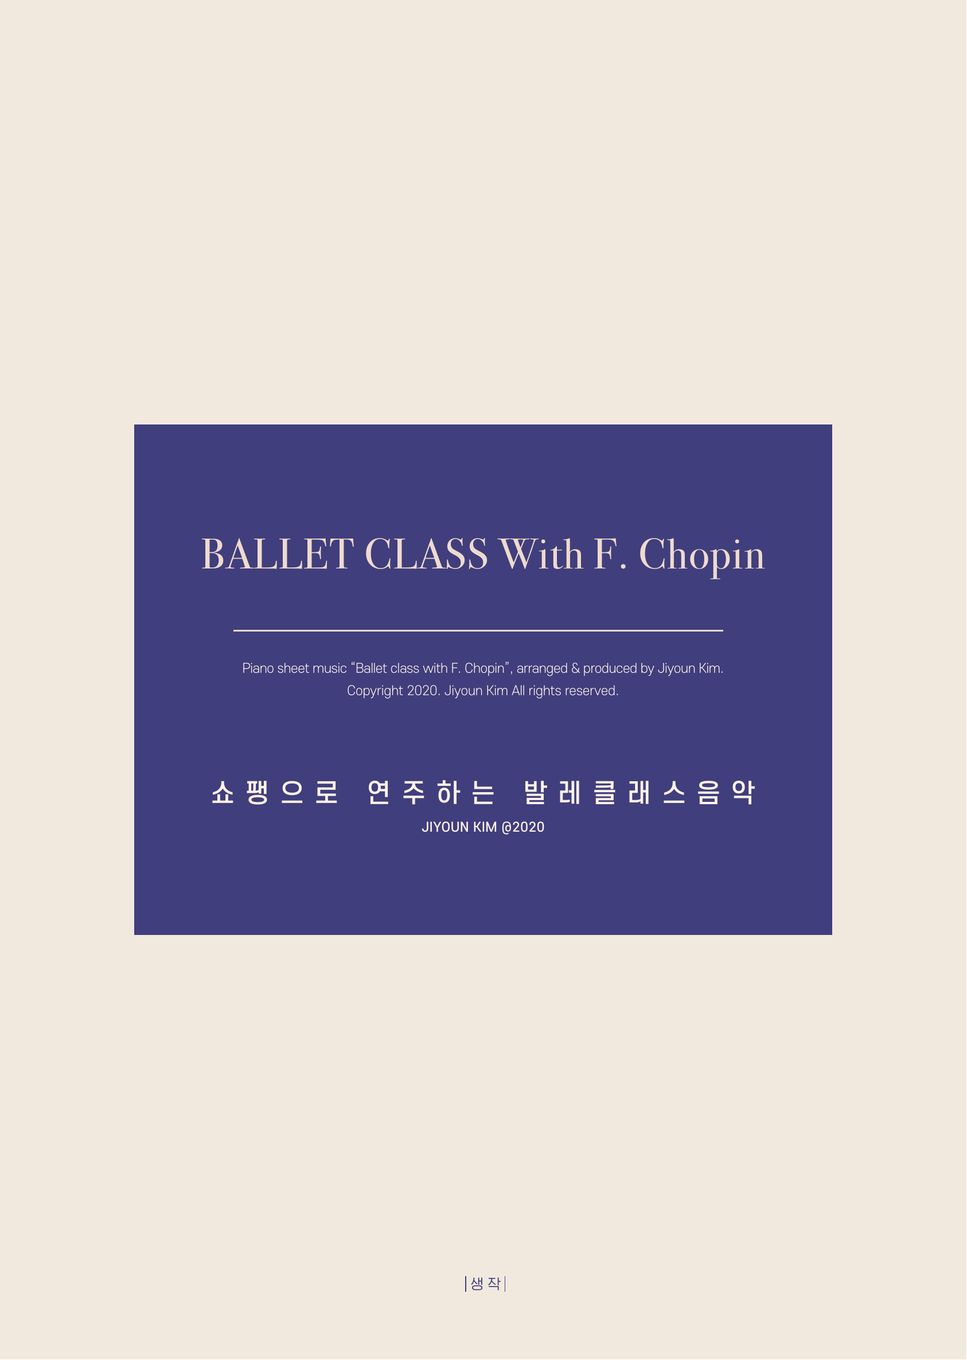 F. Chopin - Ballet Class with F. Chopin -  24. Petit allegro Ⅲ by Jiyoun KIM